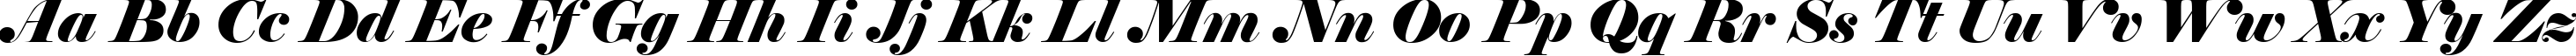 Пример написания английского алфавита шрифтом Elephant Italic